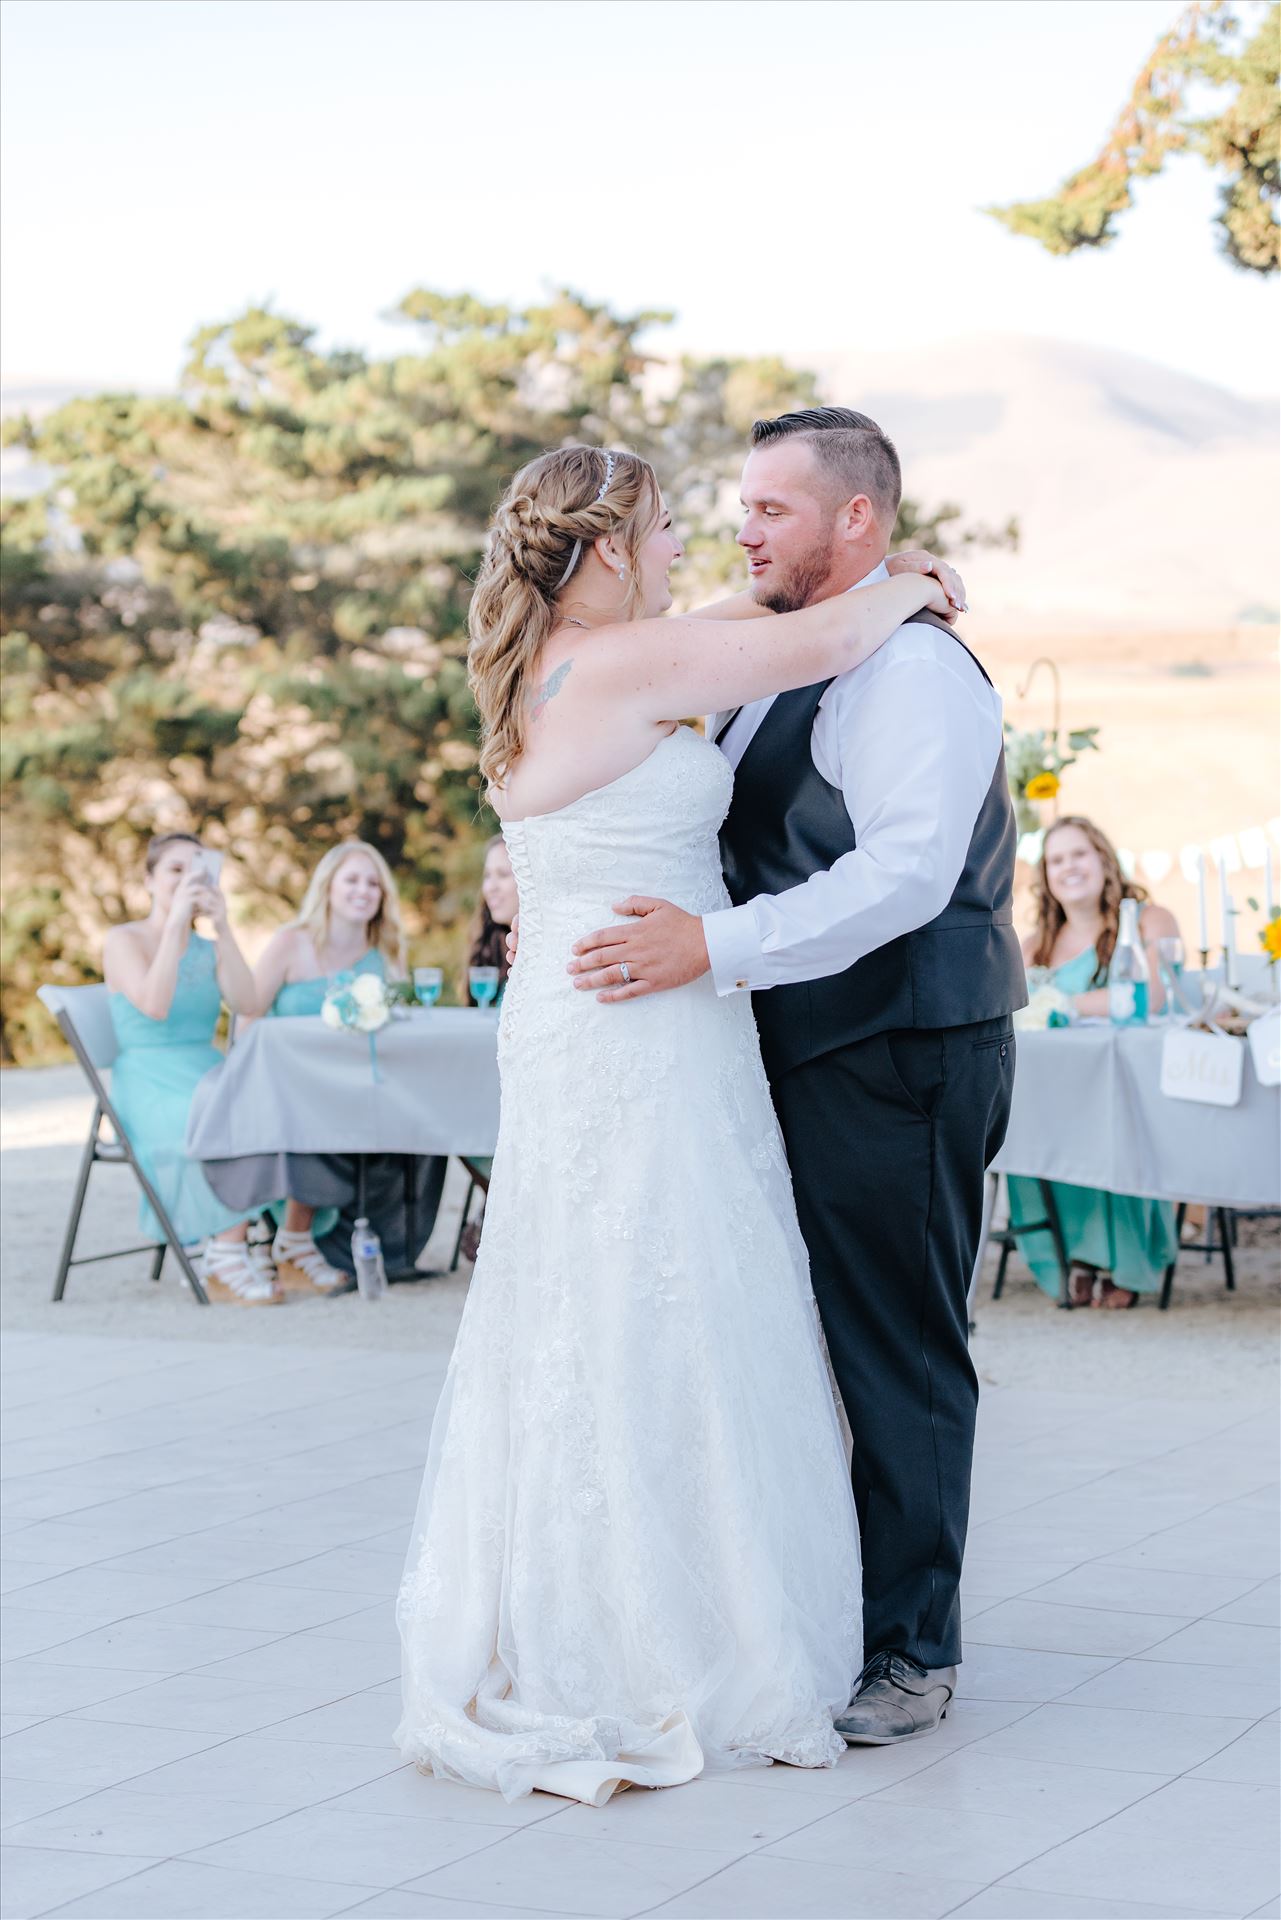 Cherie and Brandon 107 - Mirror's Edge Photography, a San Luis Obispo Wedding Photographer, captures a wedding at the Historic Dana Adobe in Nipomo California.  First dance. by Sarah Williams